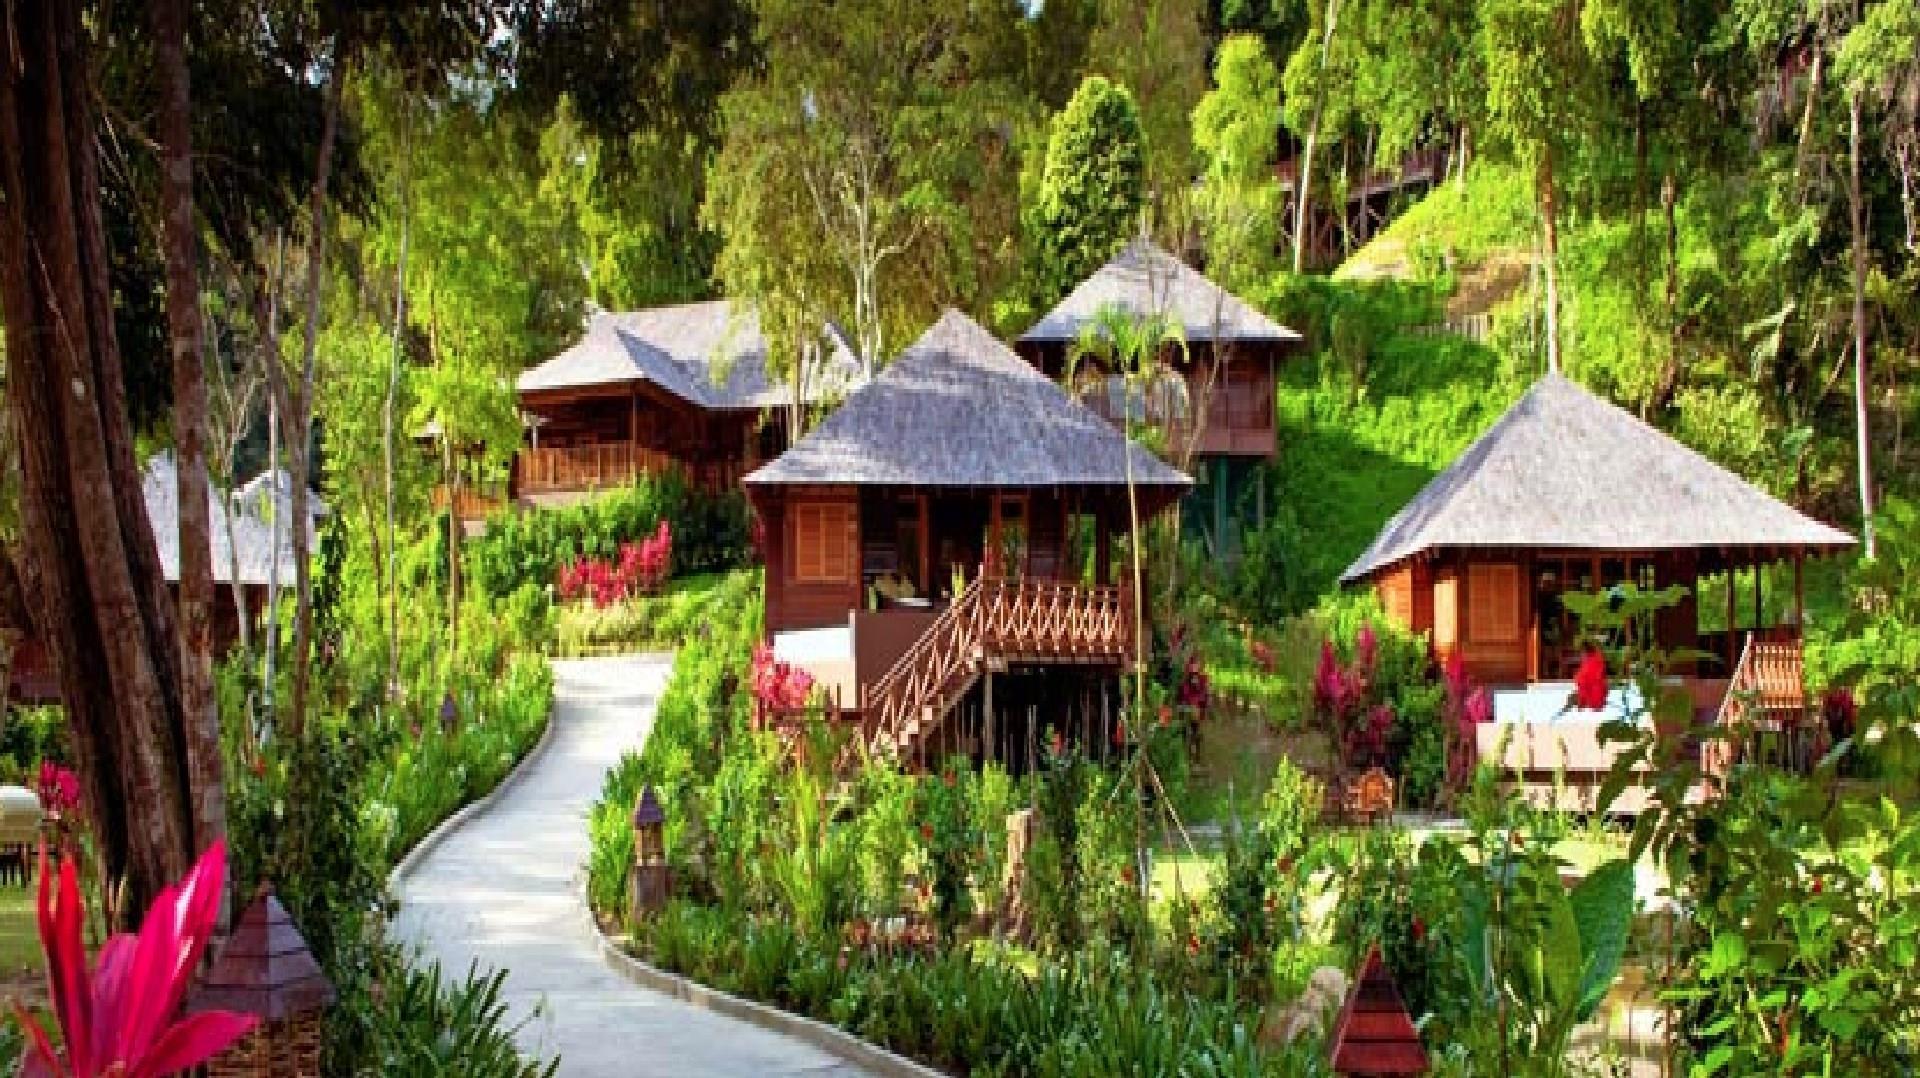 Bungaraya Island Resort in Kota Kinabalu, MY